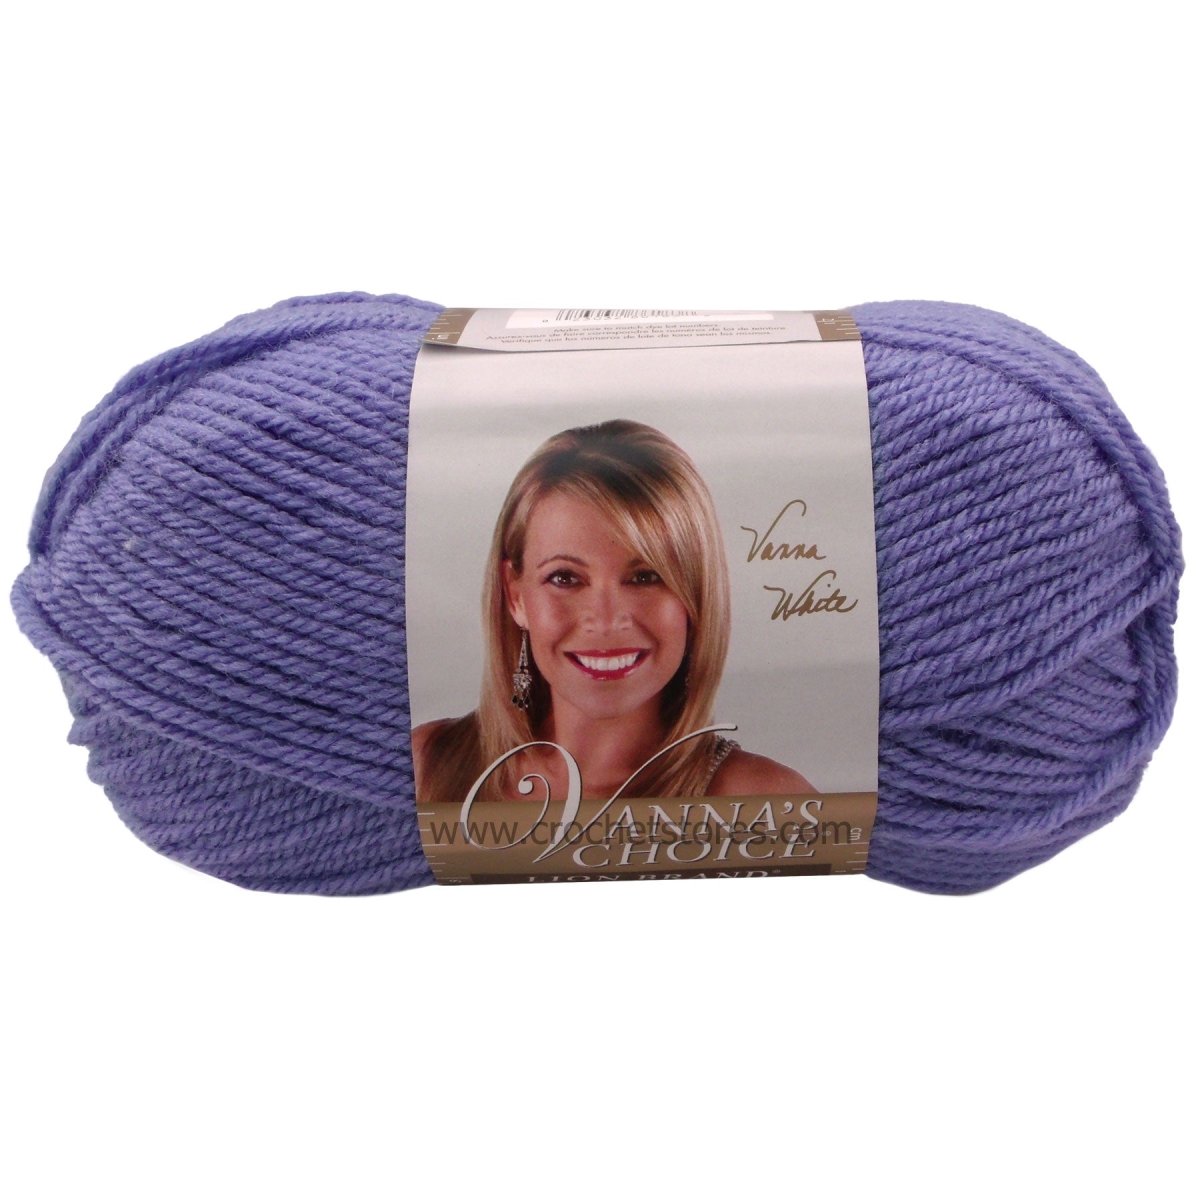 VANNAS CHOICE - Crochetstores860-183